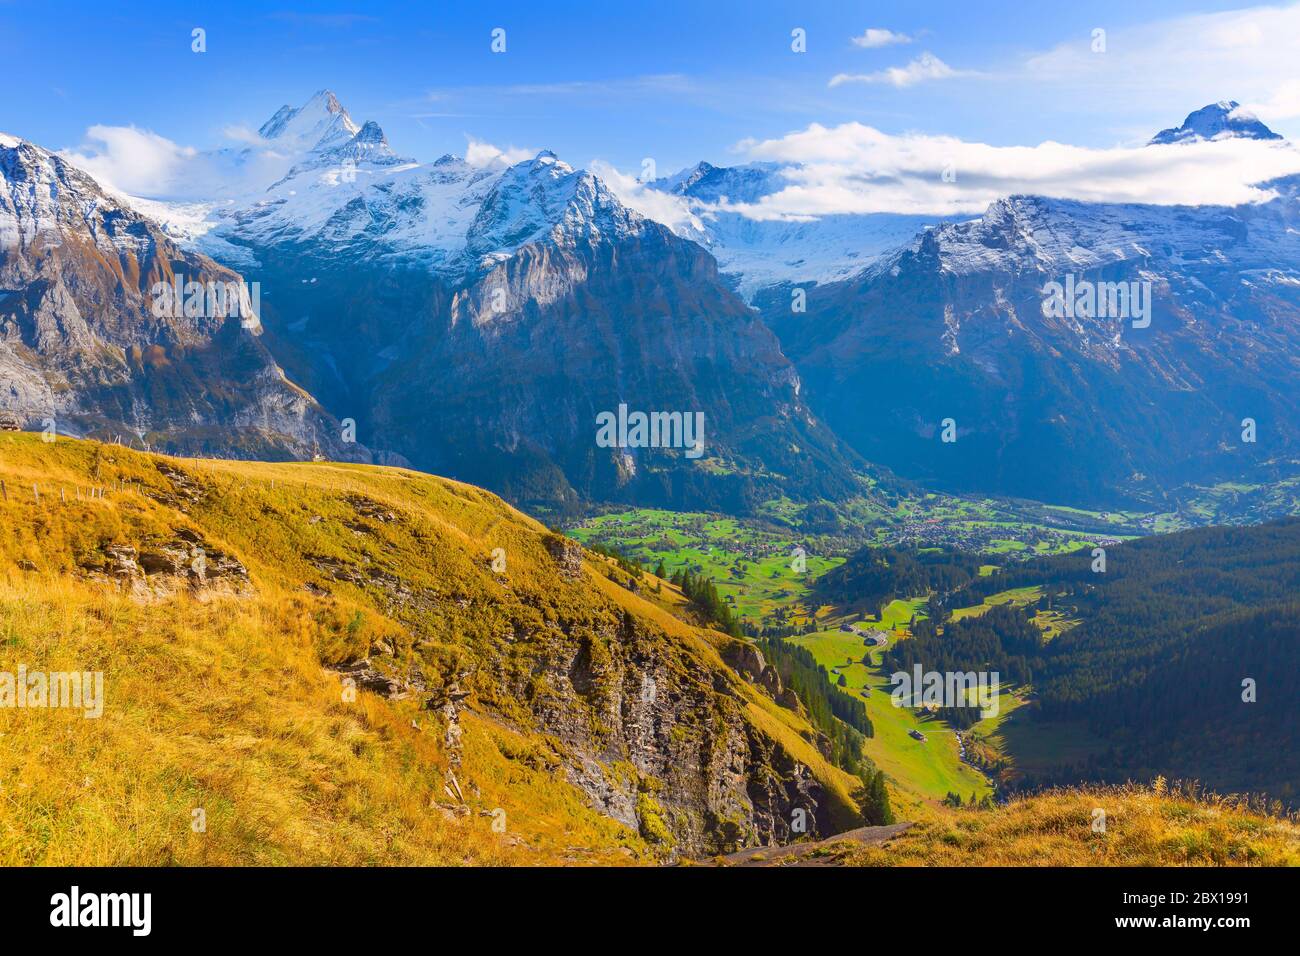 Swiss alpine mountain landscape, snowy peaks, Grindelwald valley, Switzerland Stock Photo